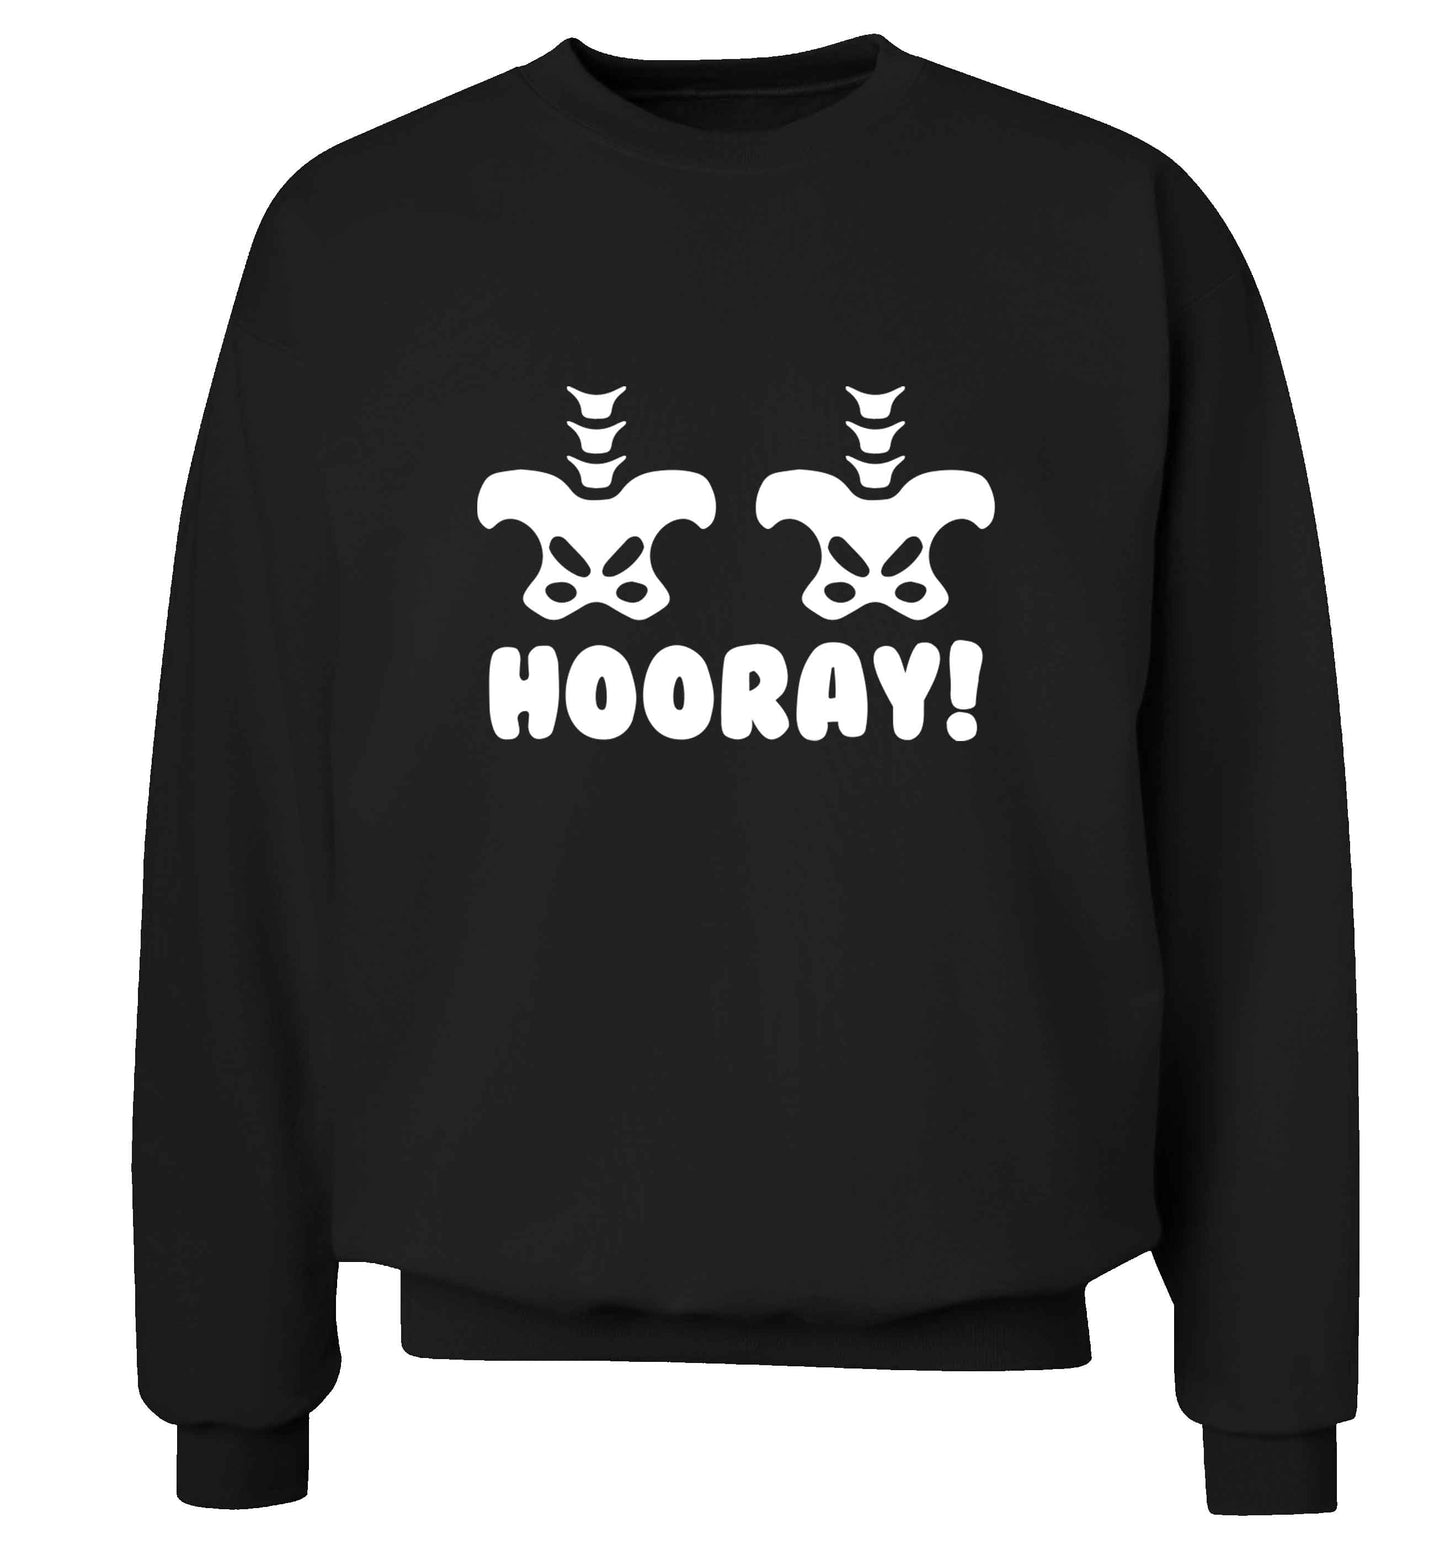 Hip Hip Hooray! adult's unisex black sweater 2XL